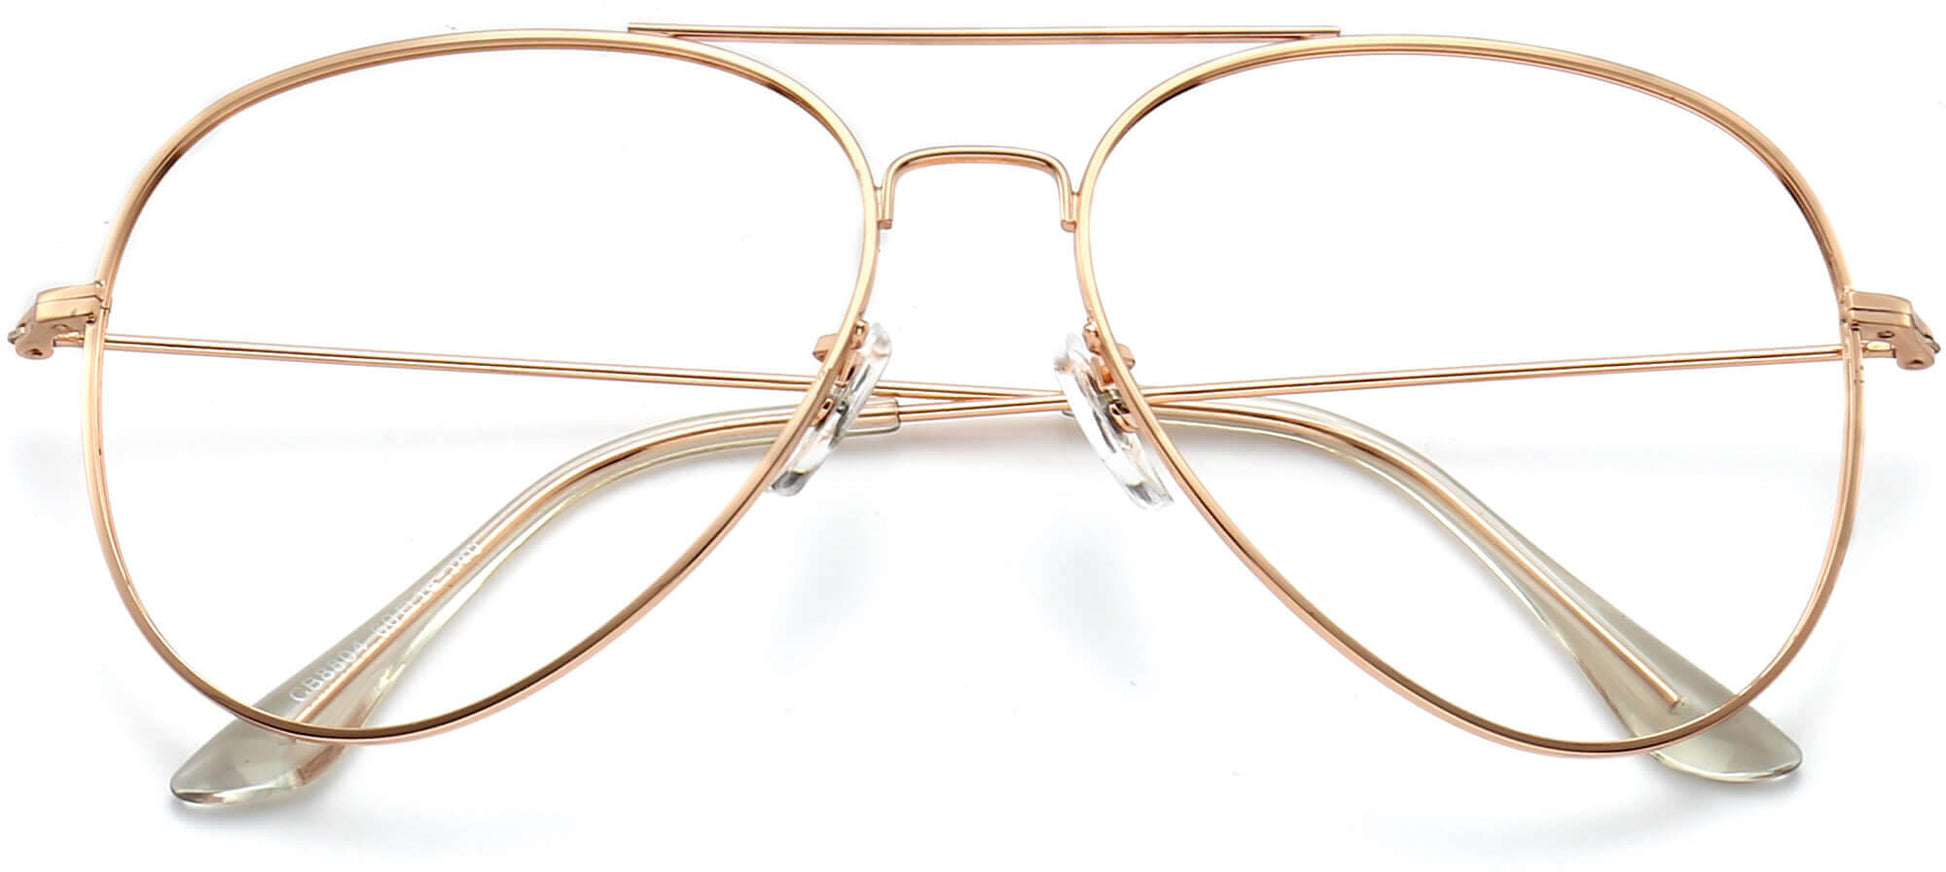 Tucker Aviator Gold Eyeglasses from ANRRI, closed view